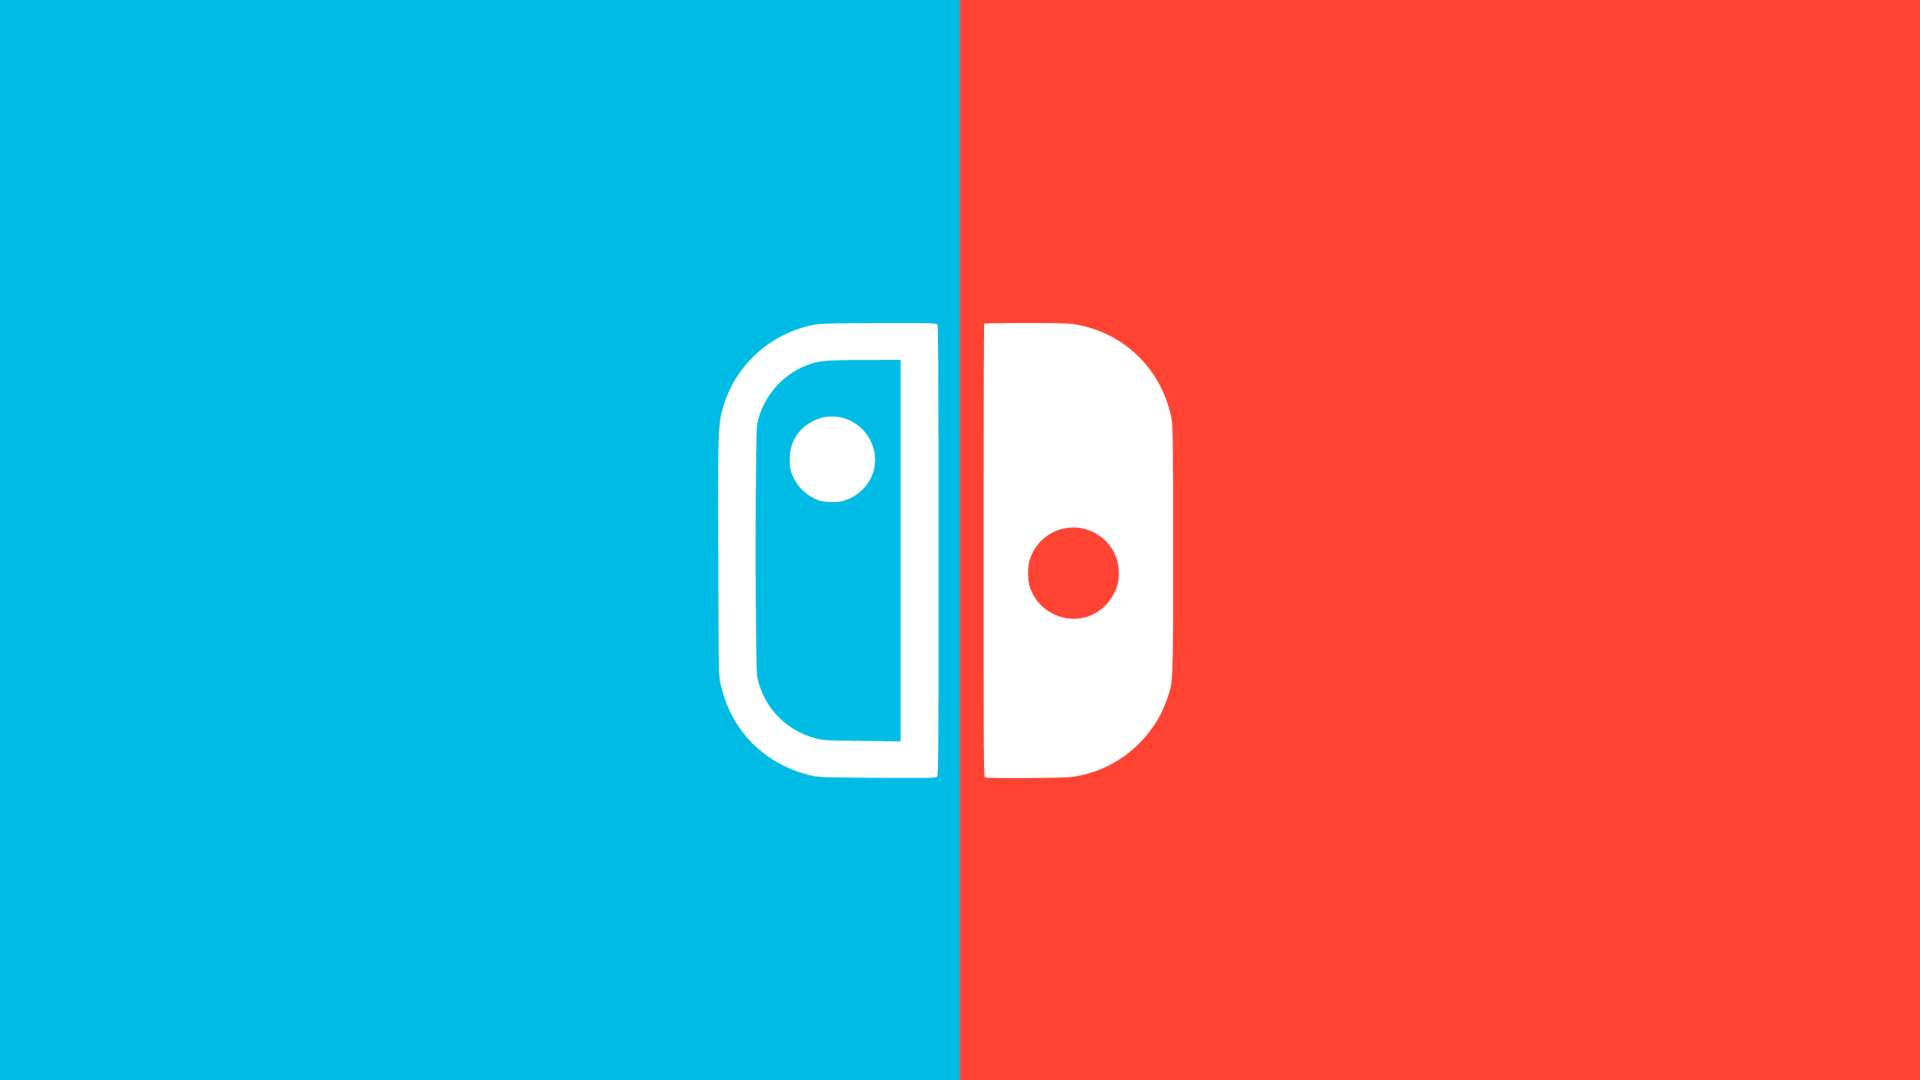 Nintendo Switch Logo Wallpaper 60383 1920x1080 px